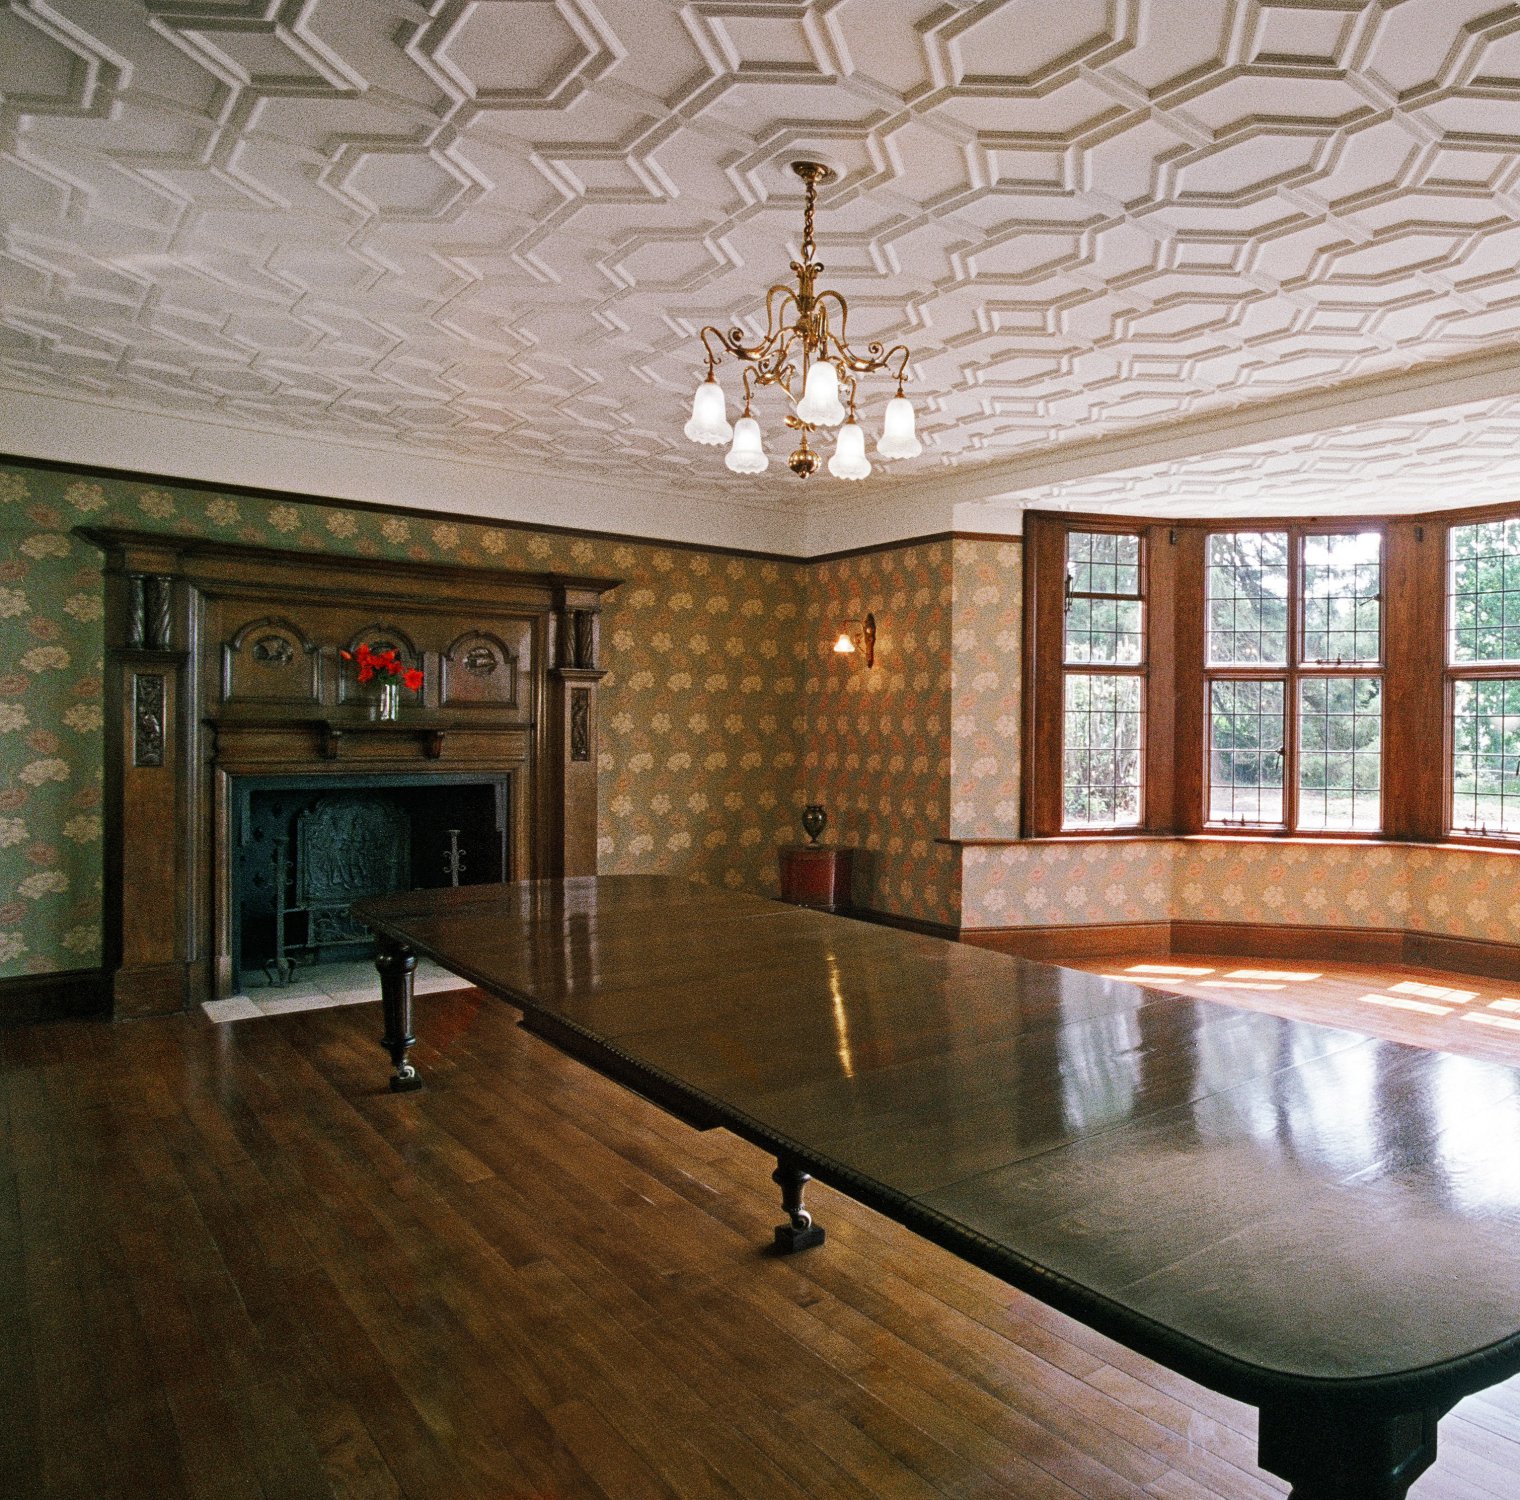 The Dining Room, after restoration